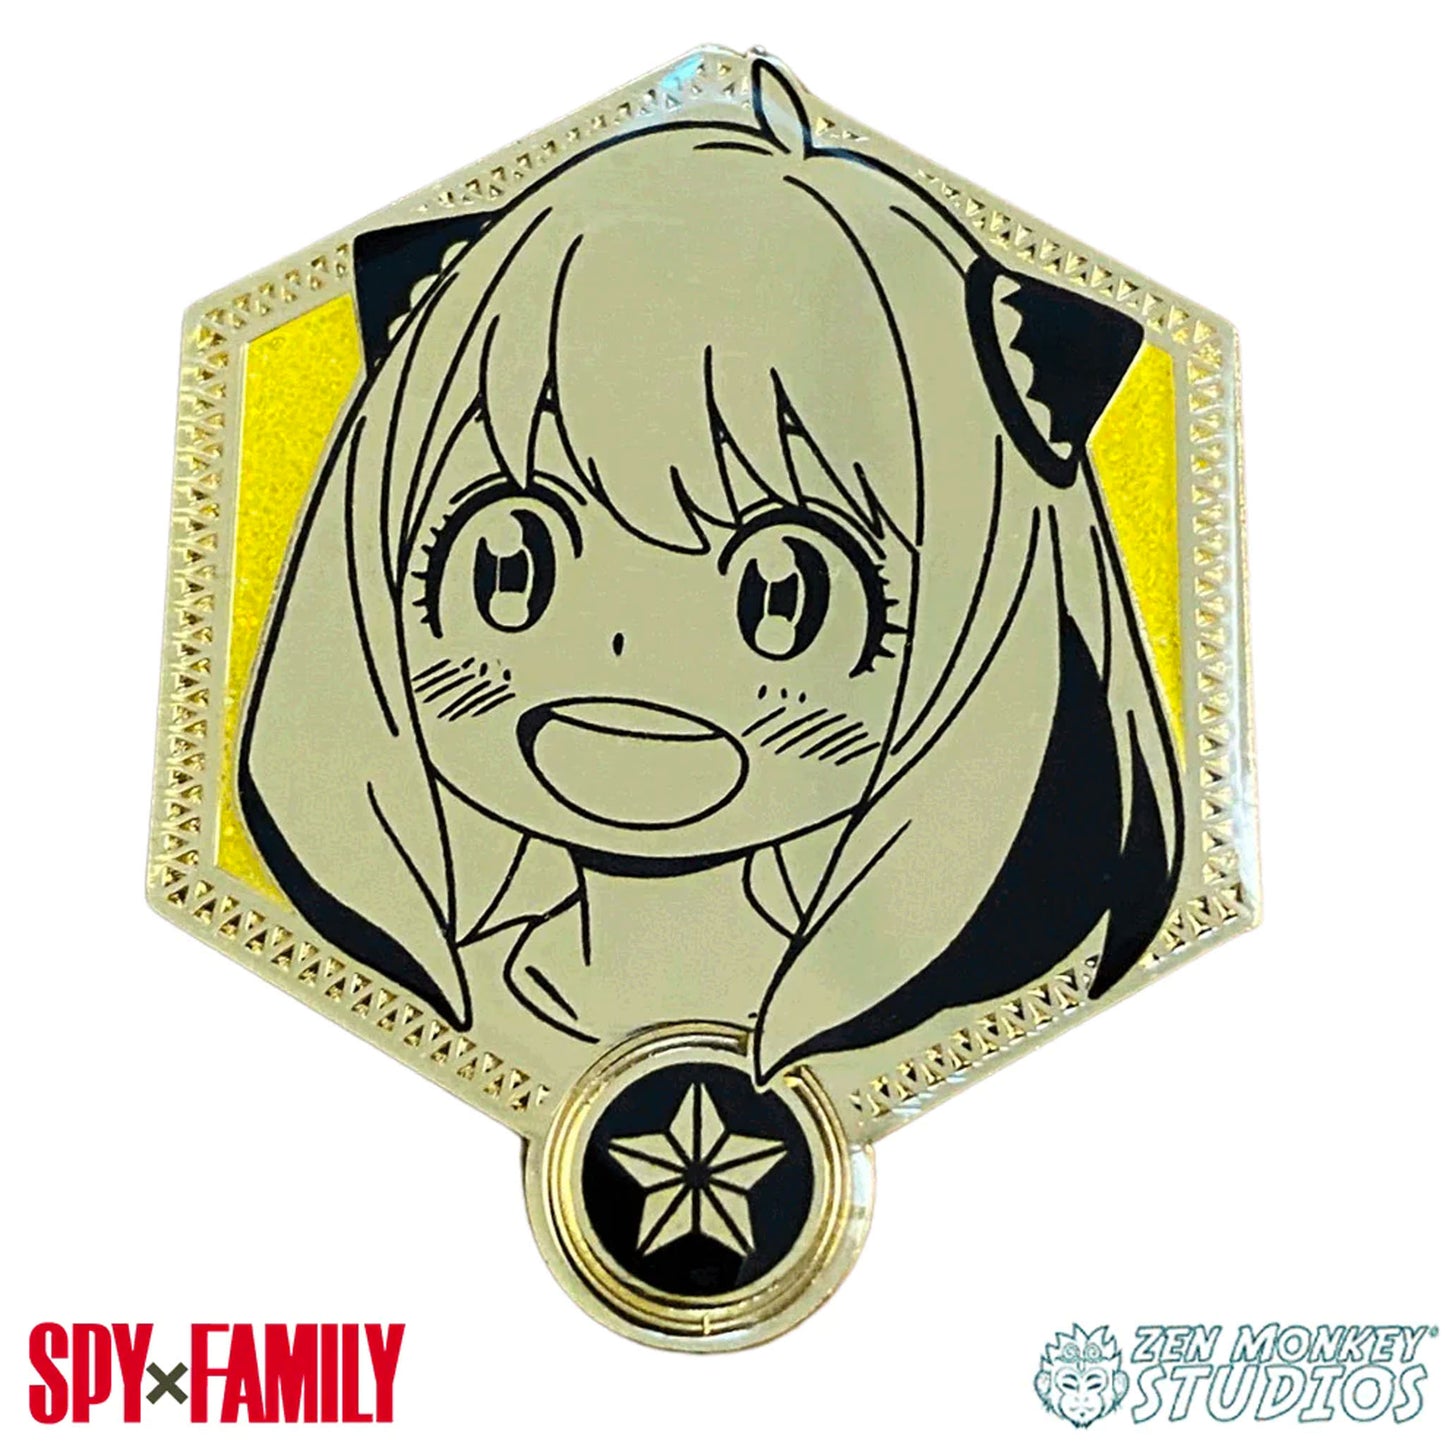 Anya (Spy X Family) Golden Series Pin